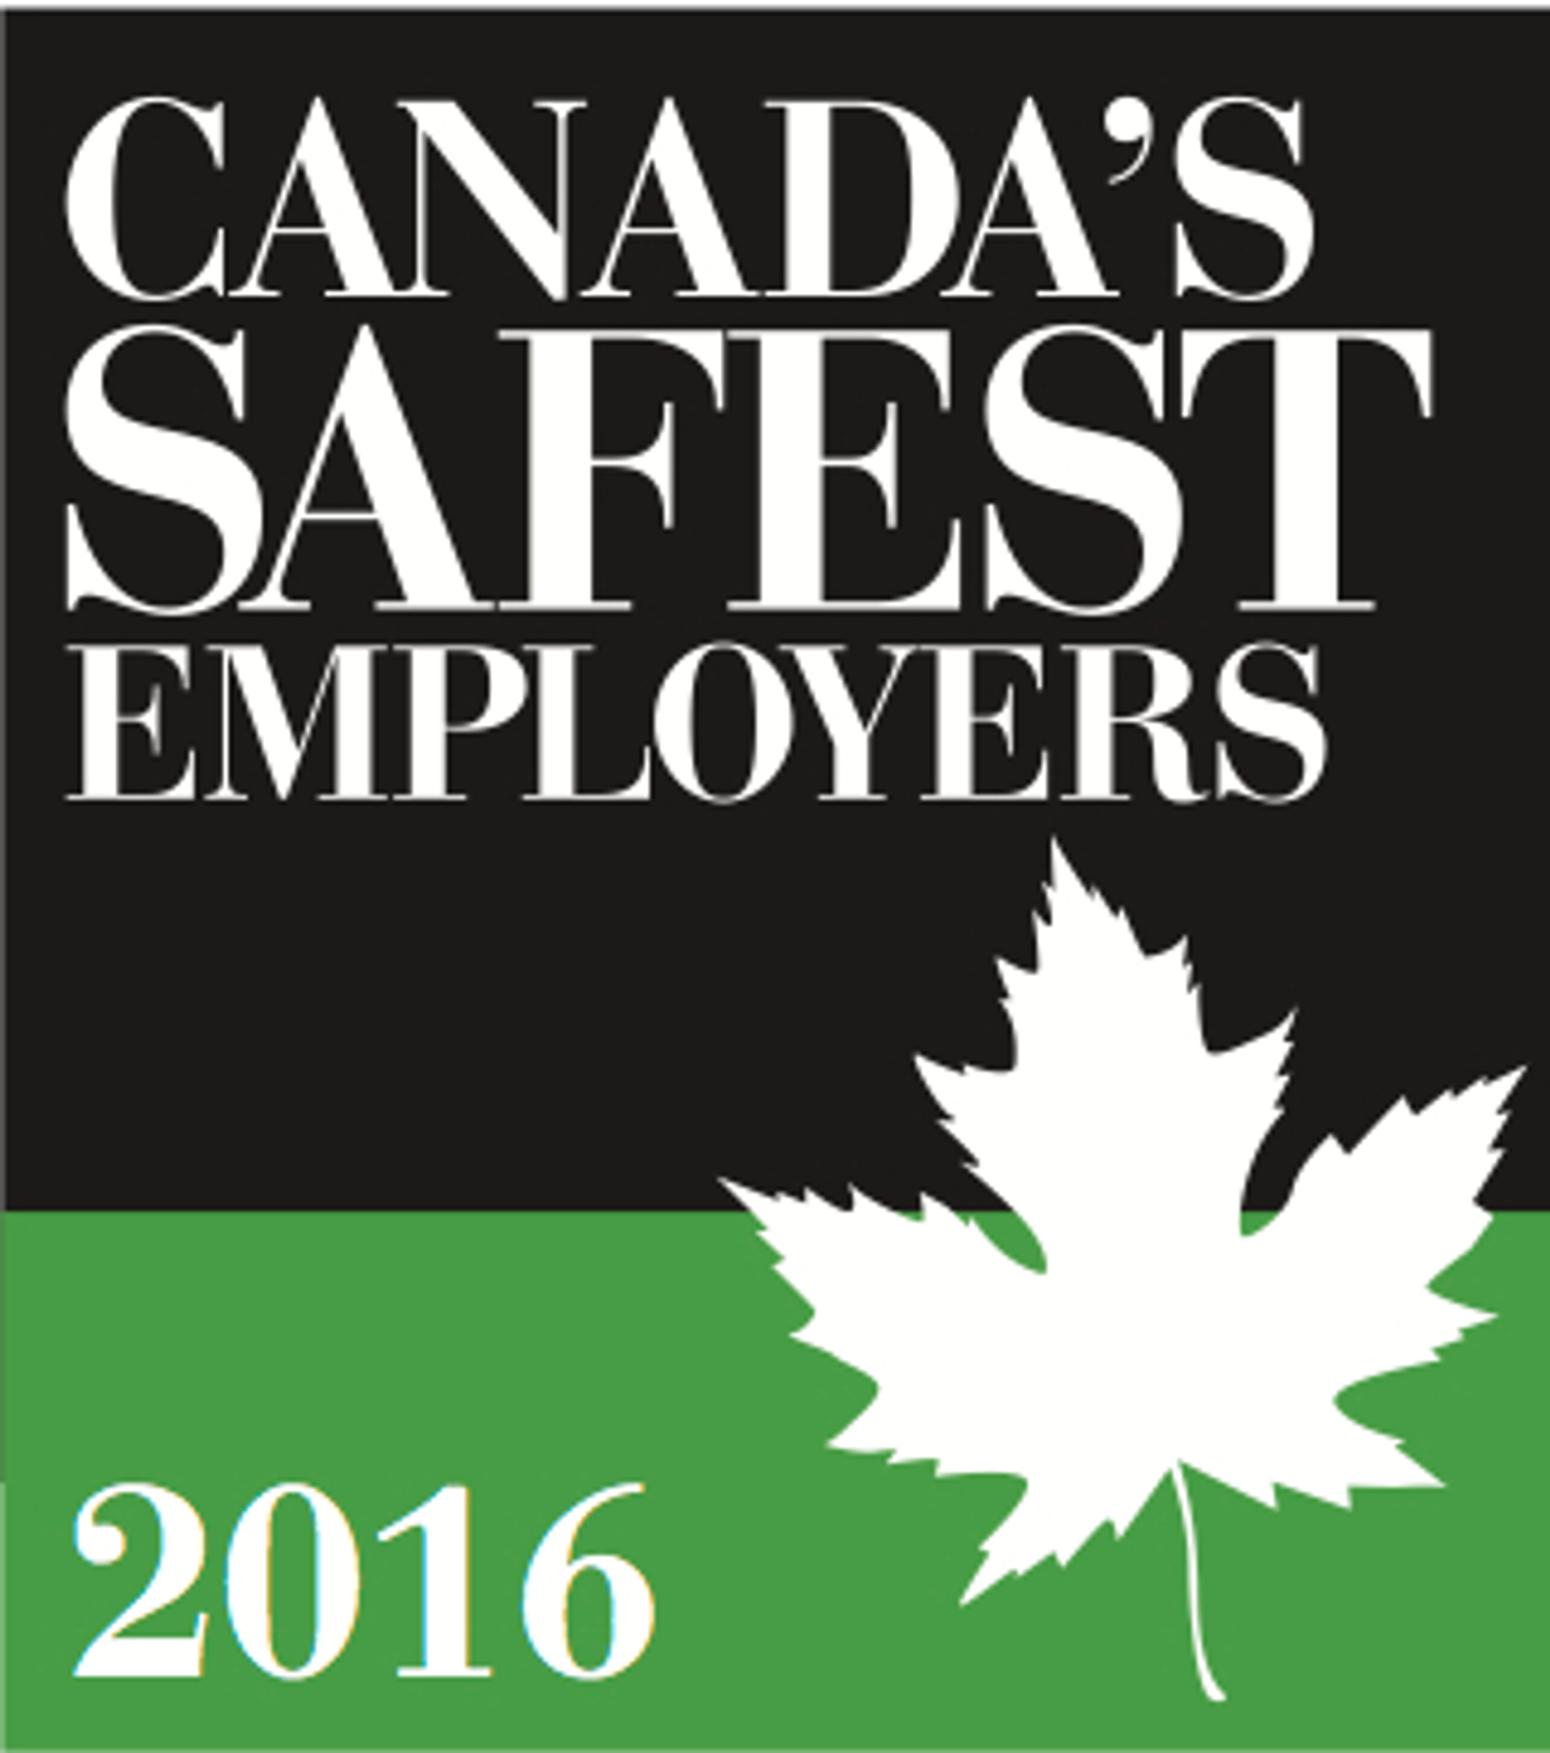 Canada's Safest Employer logo